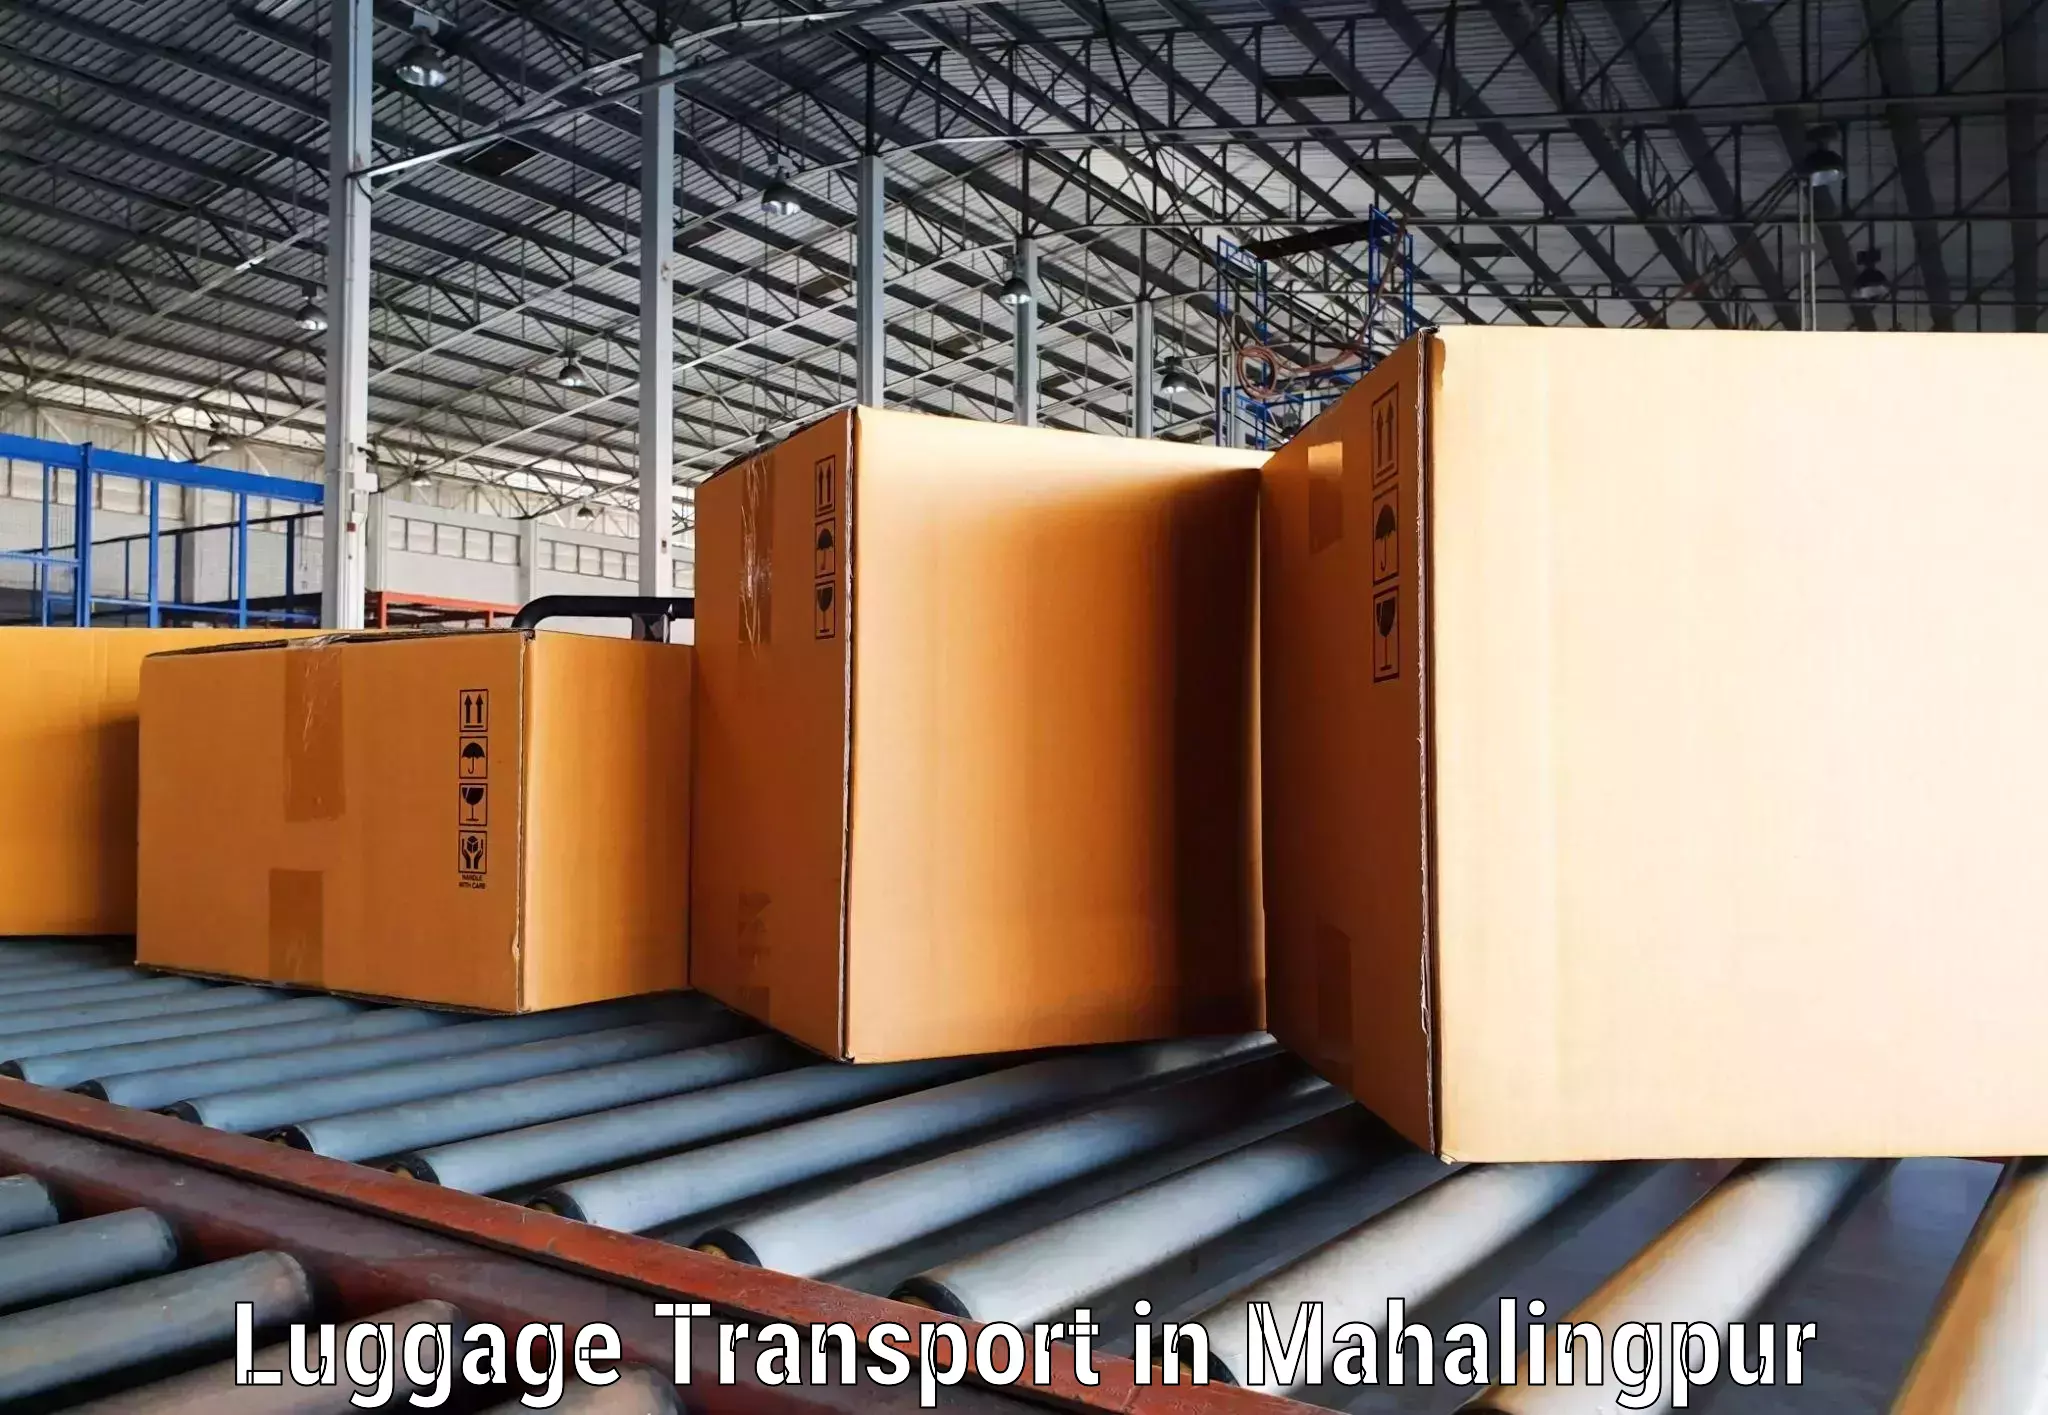 Luggage shipment tracking in Mahalingpur